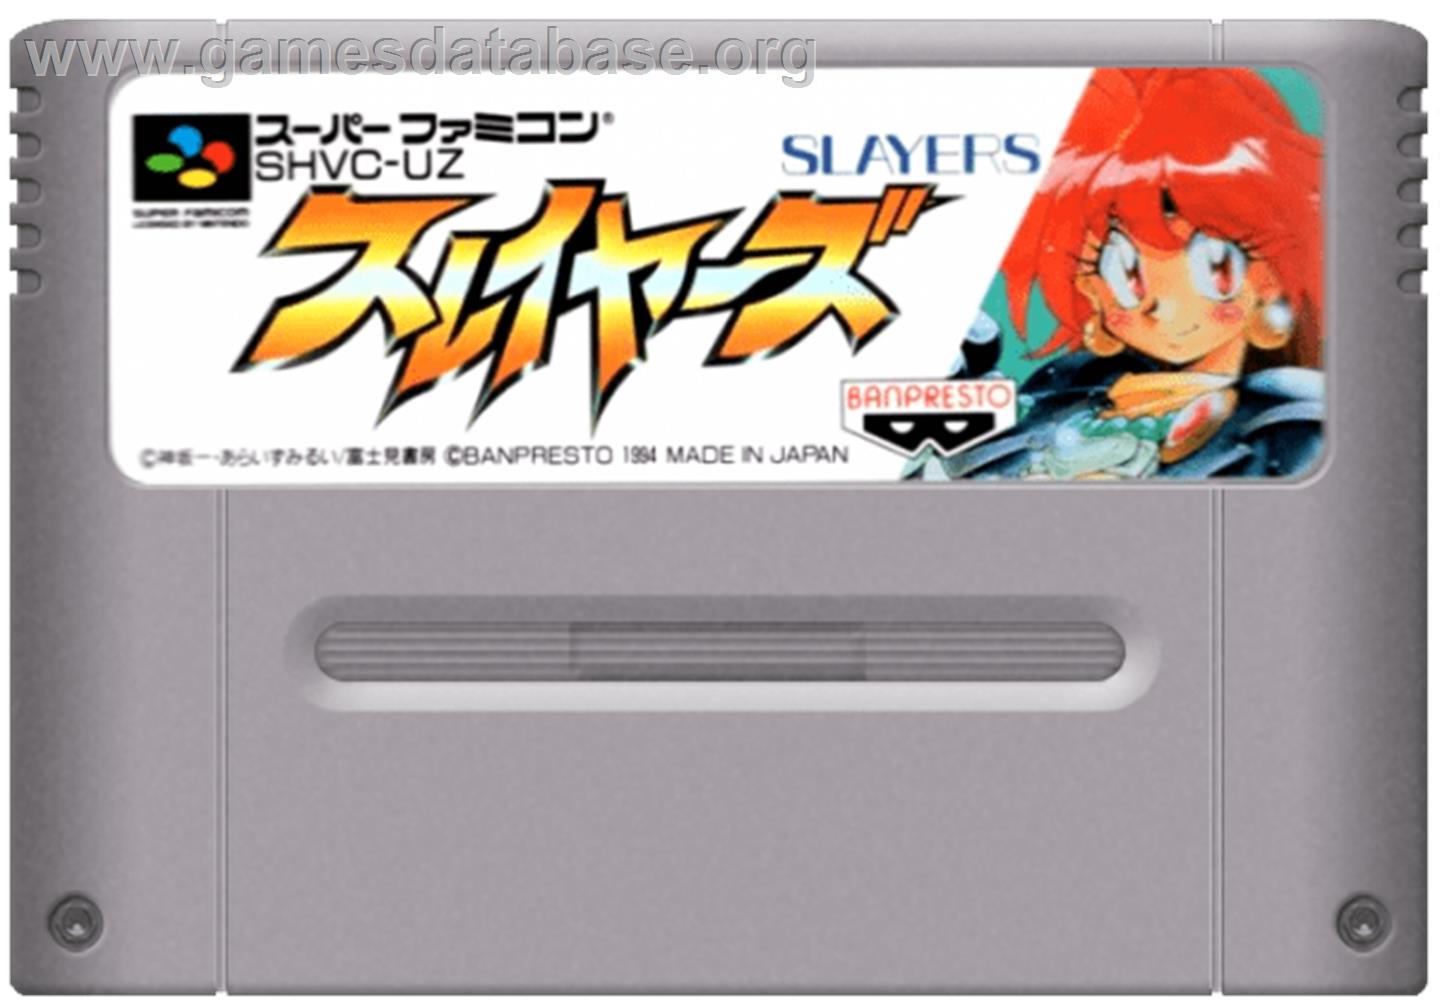 Slayers - Nintendo SNES - Artwork - Cartridge